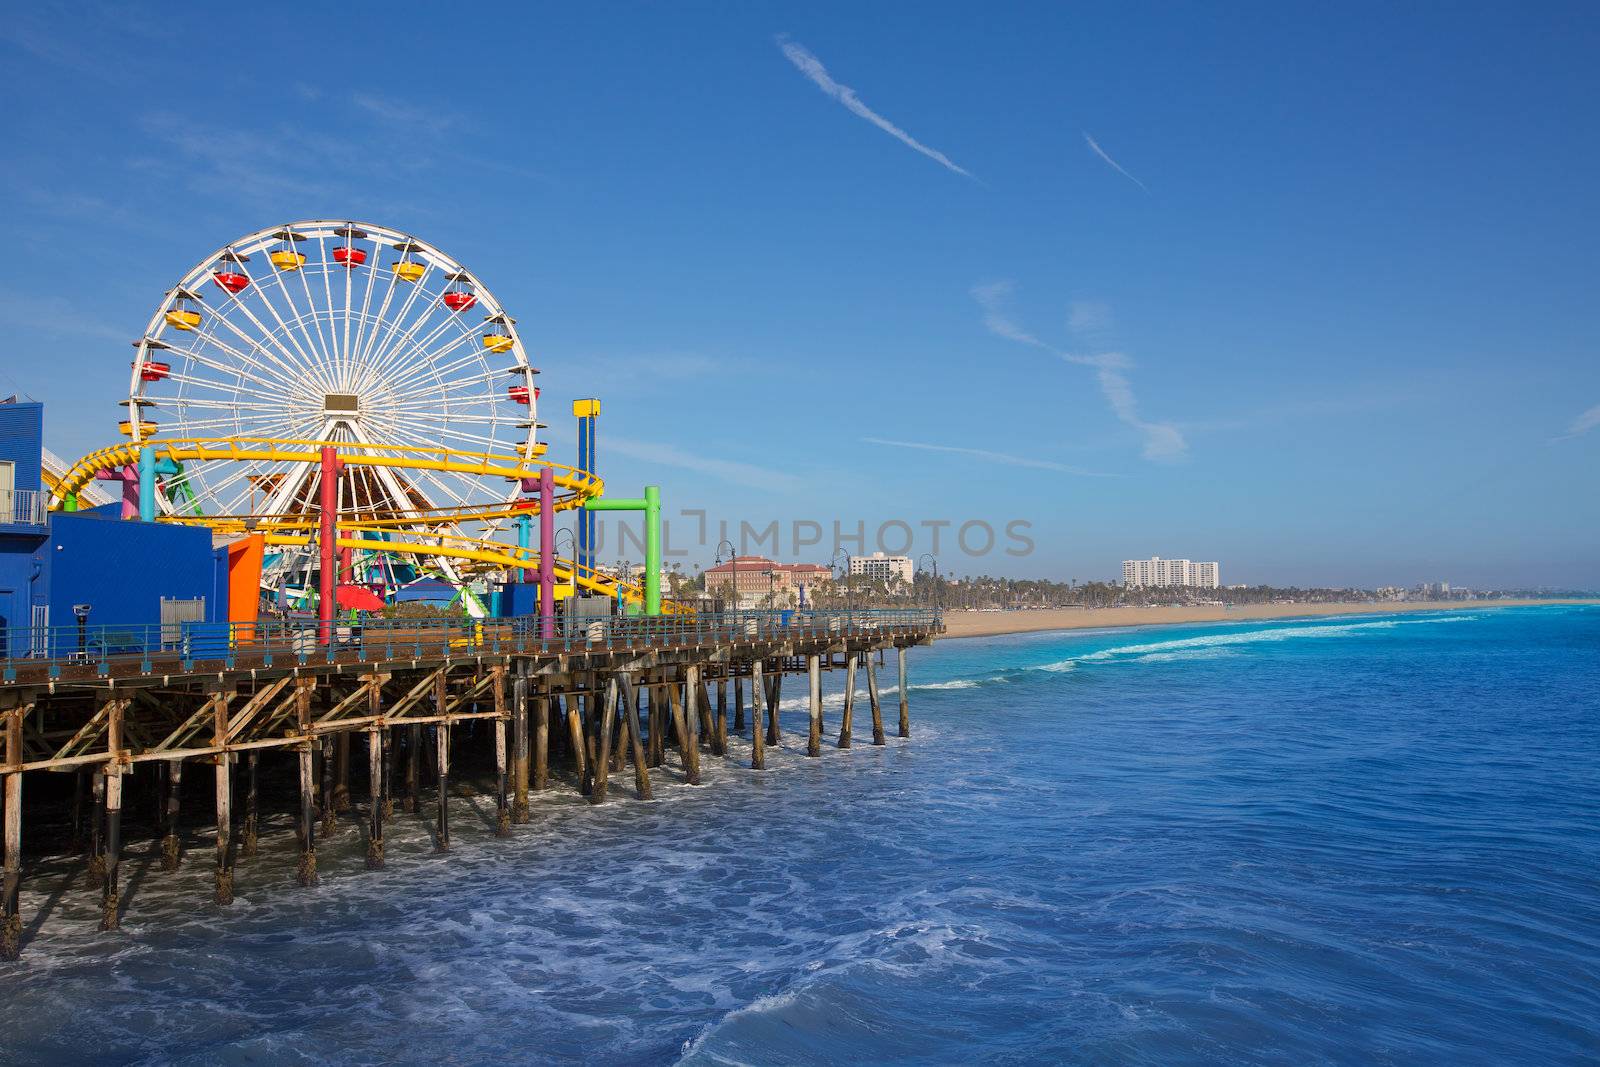 Santa Moica pier Ferris Wheel in California by lunamarina